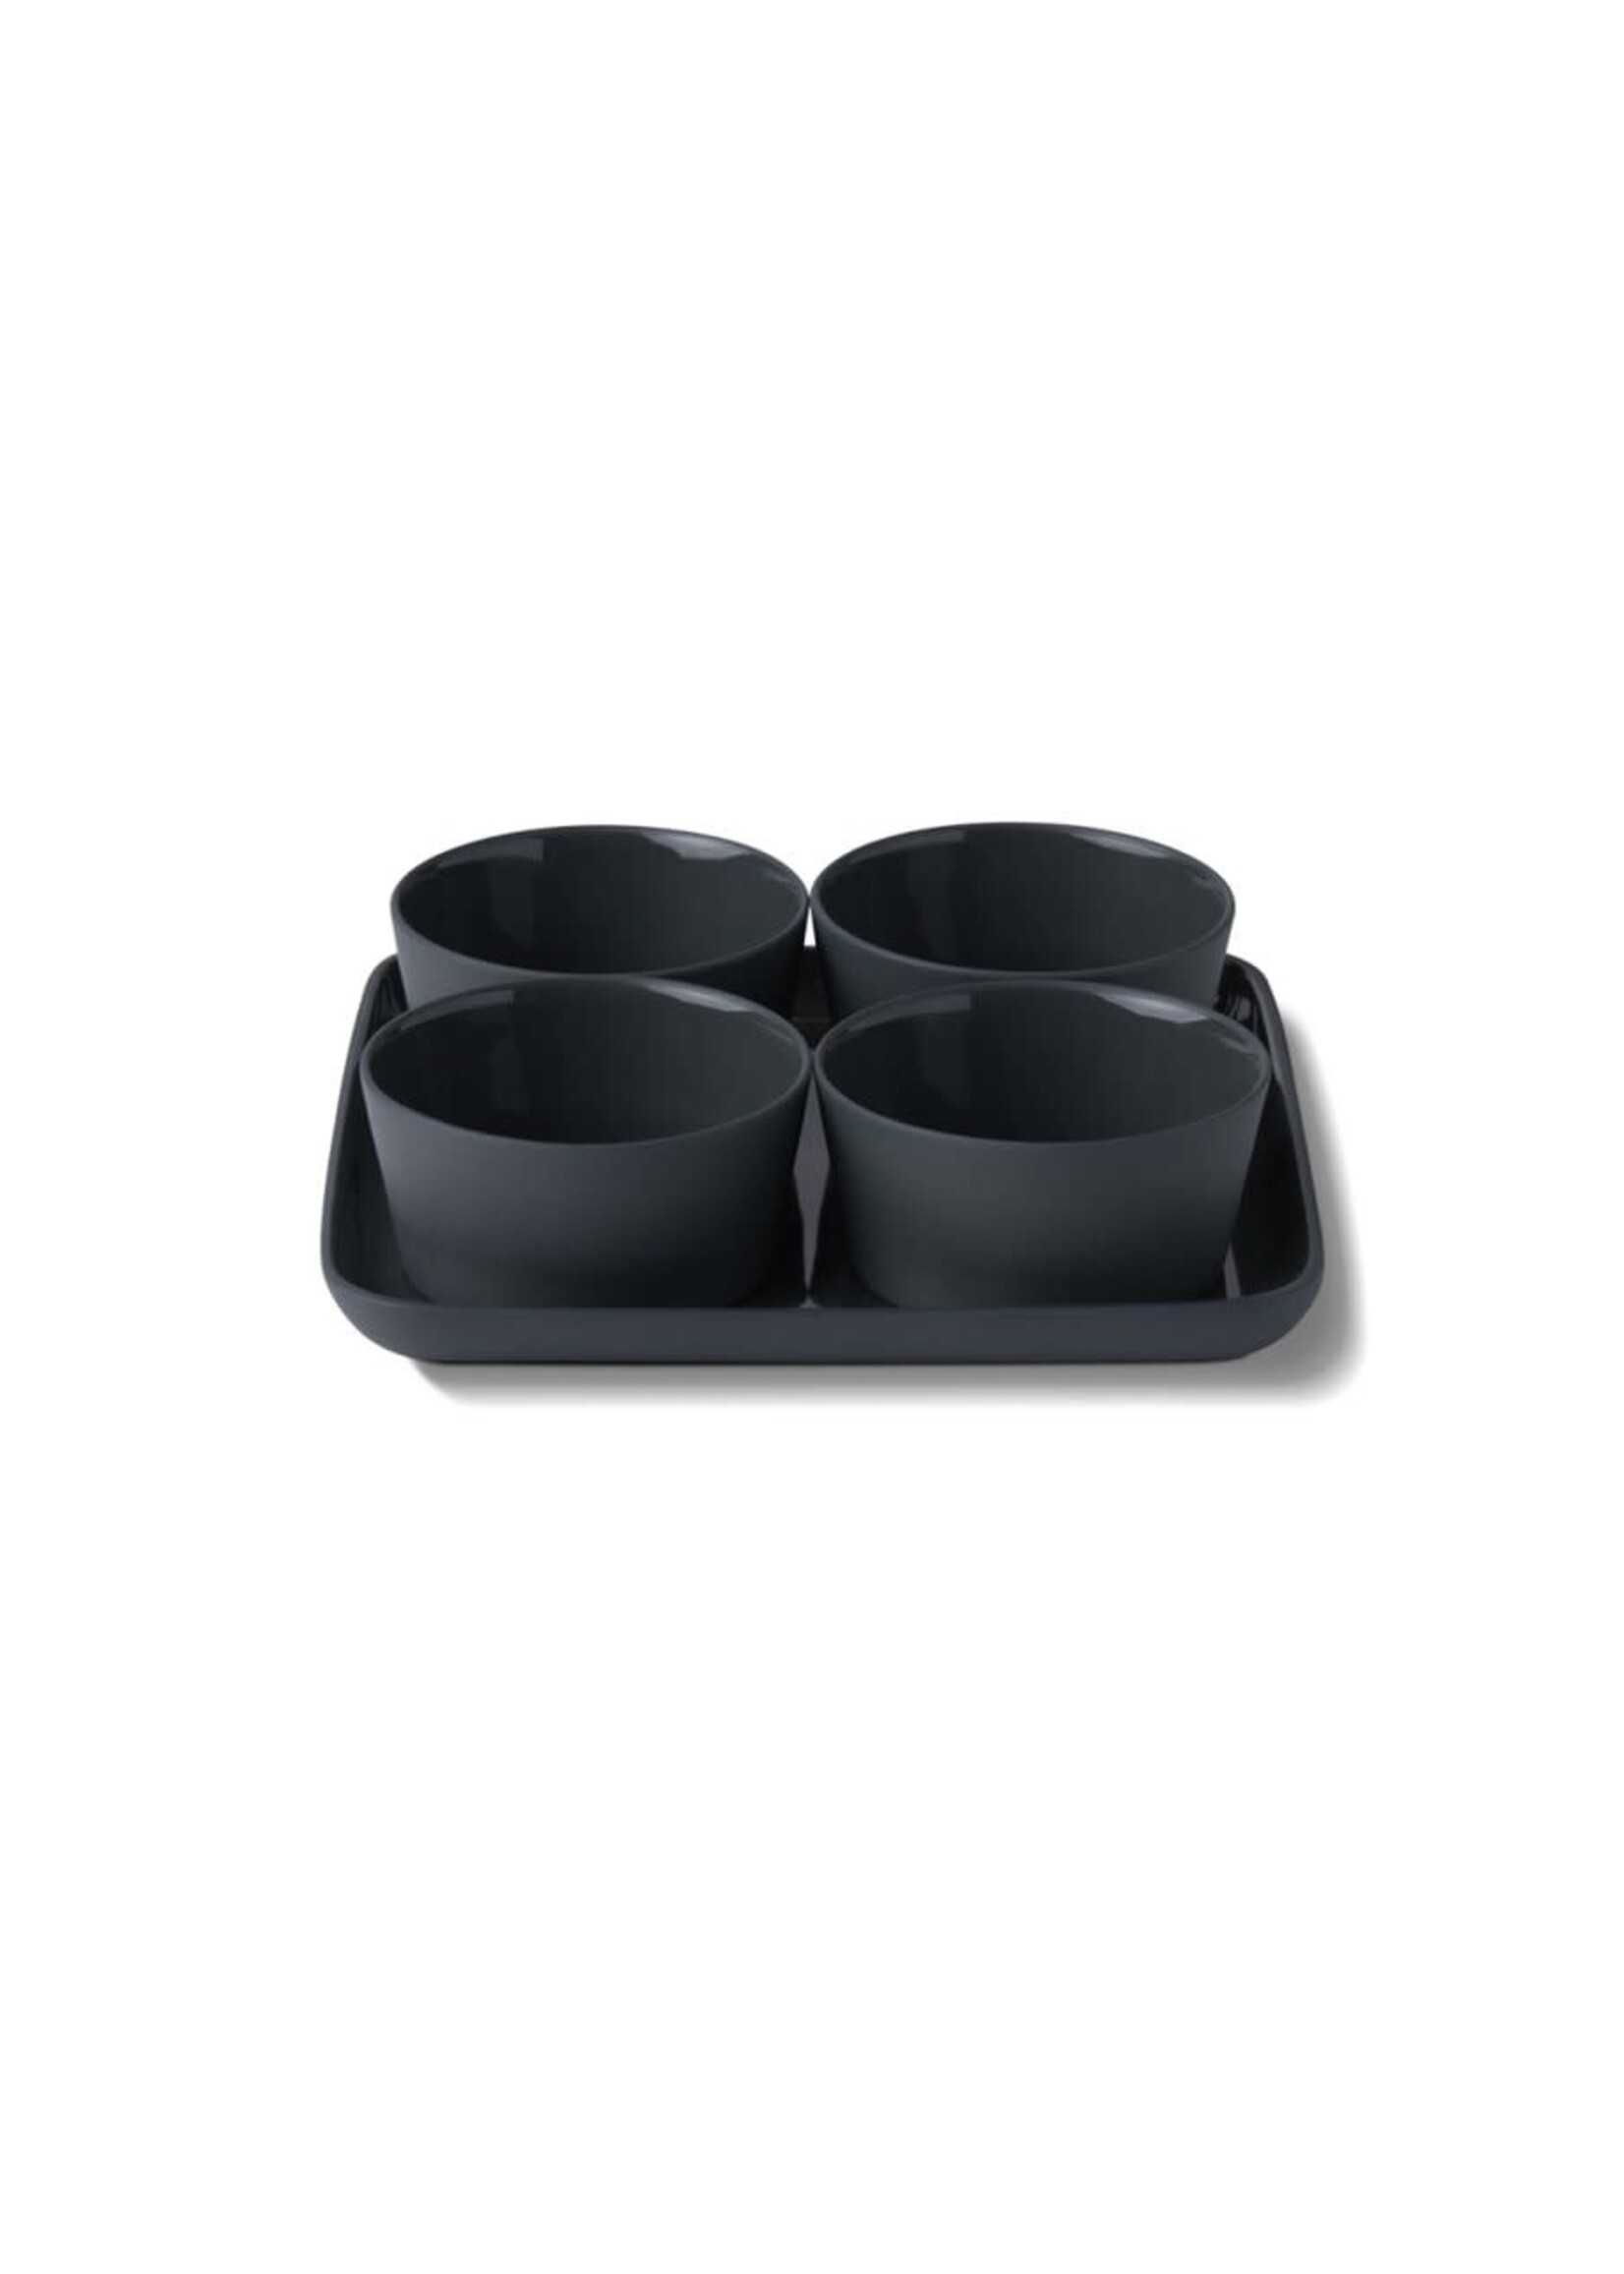 Esma Dereboy Square Service Set Porcelain - Black- Esma Dereboy Plate: 12x12x1.2 cm -Bowl: 6x6x3 cm